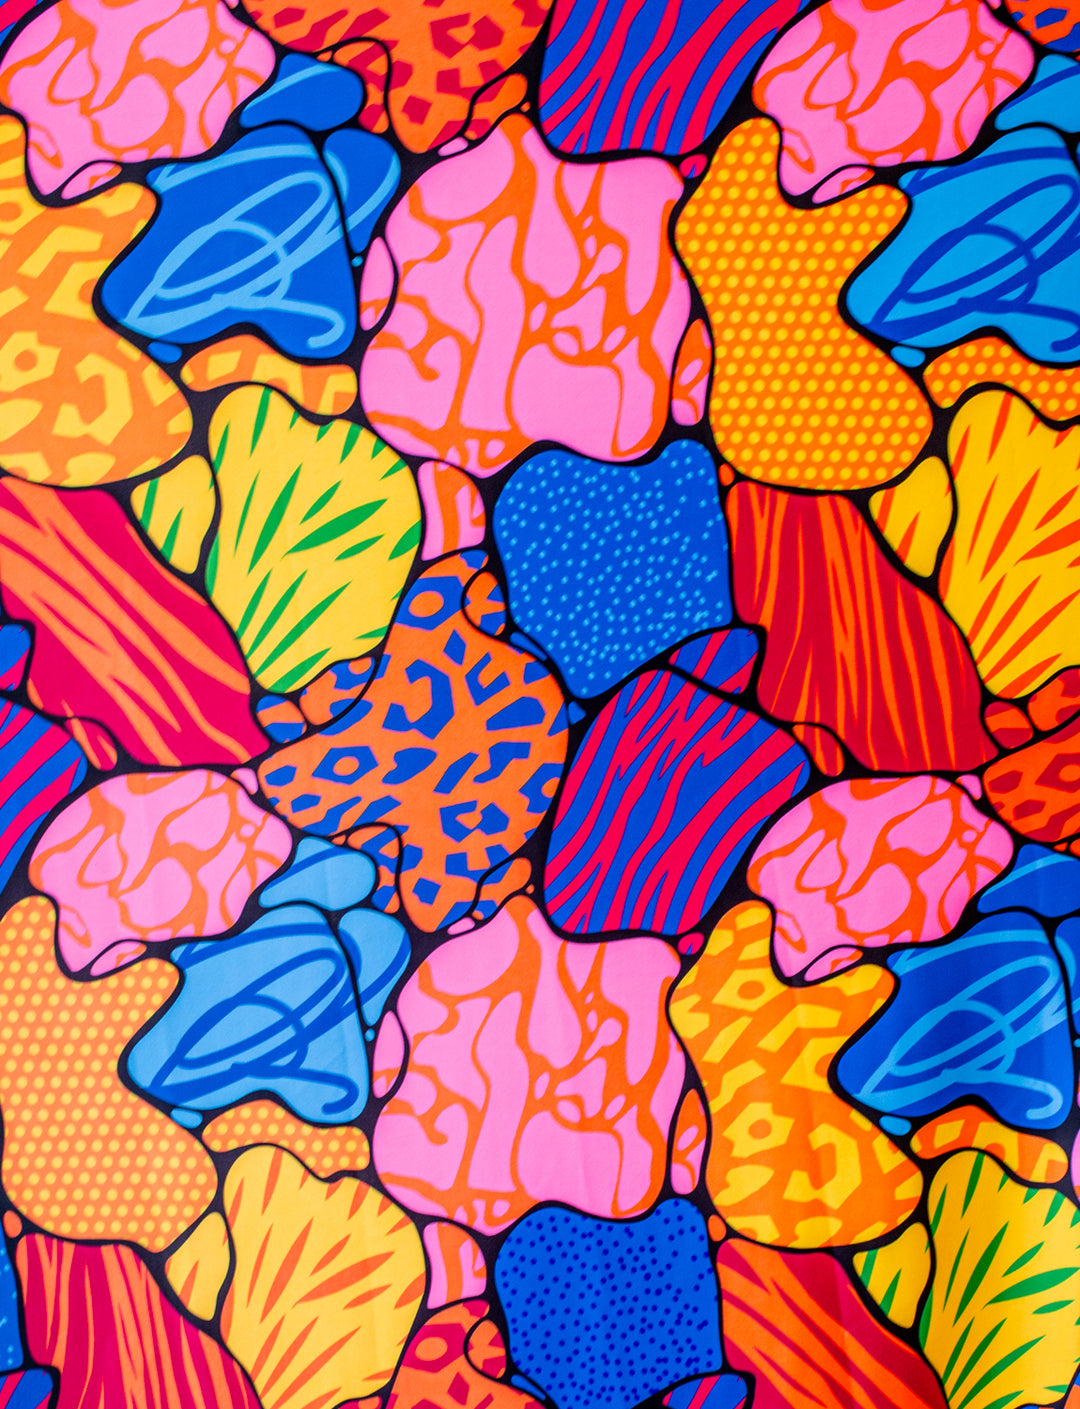 abstract print using animal prints and dots 